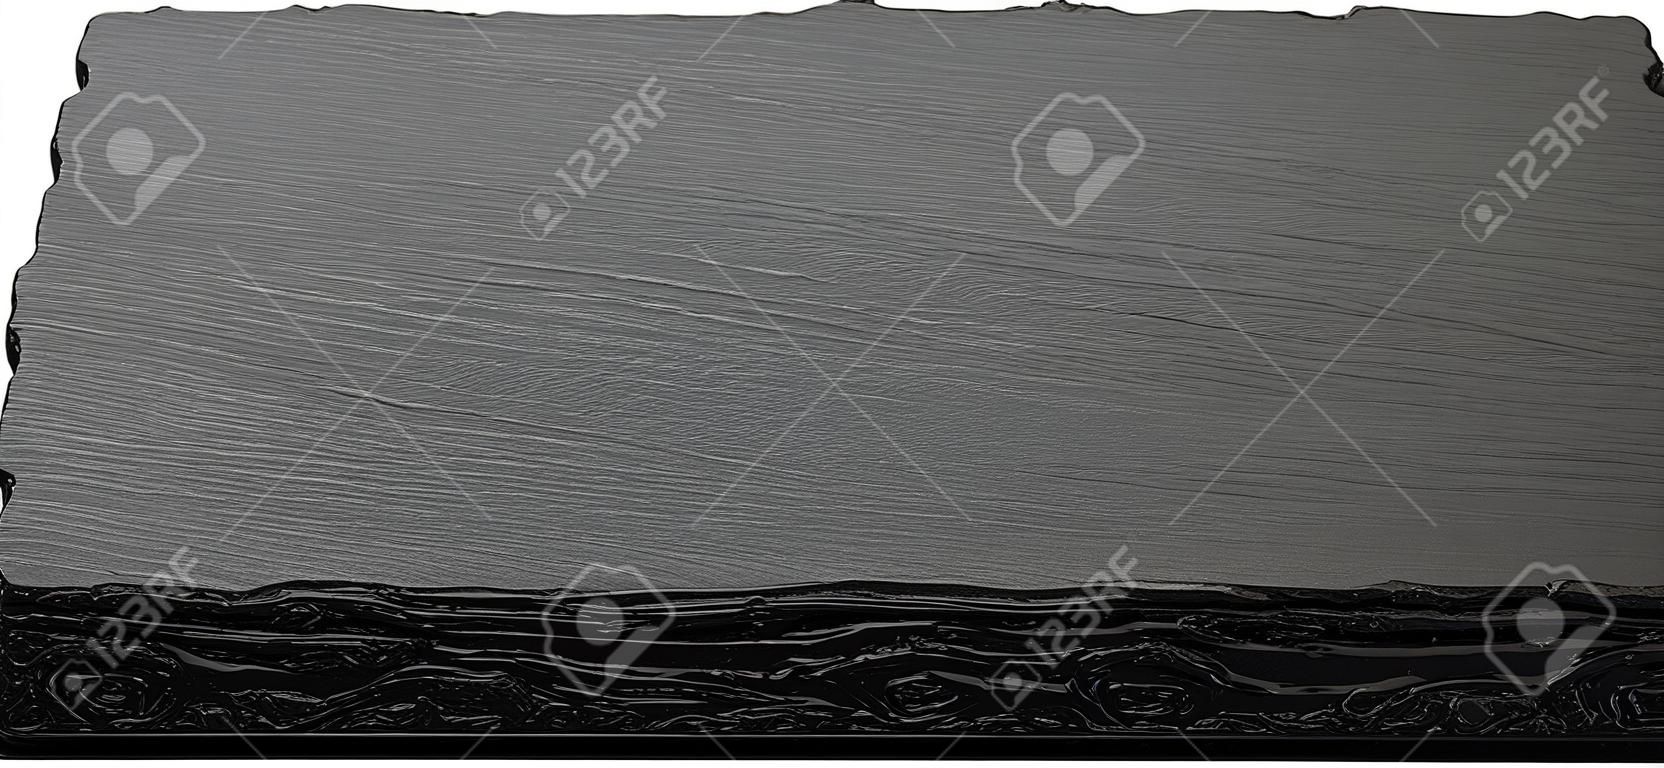 Black stone plate isolated on white background